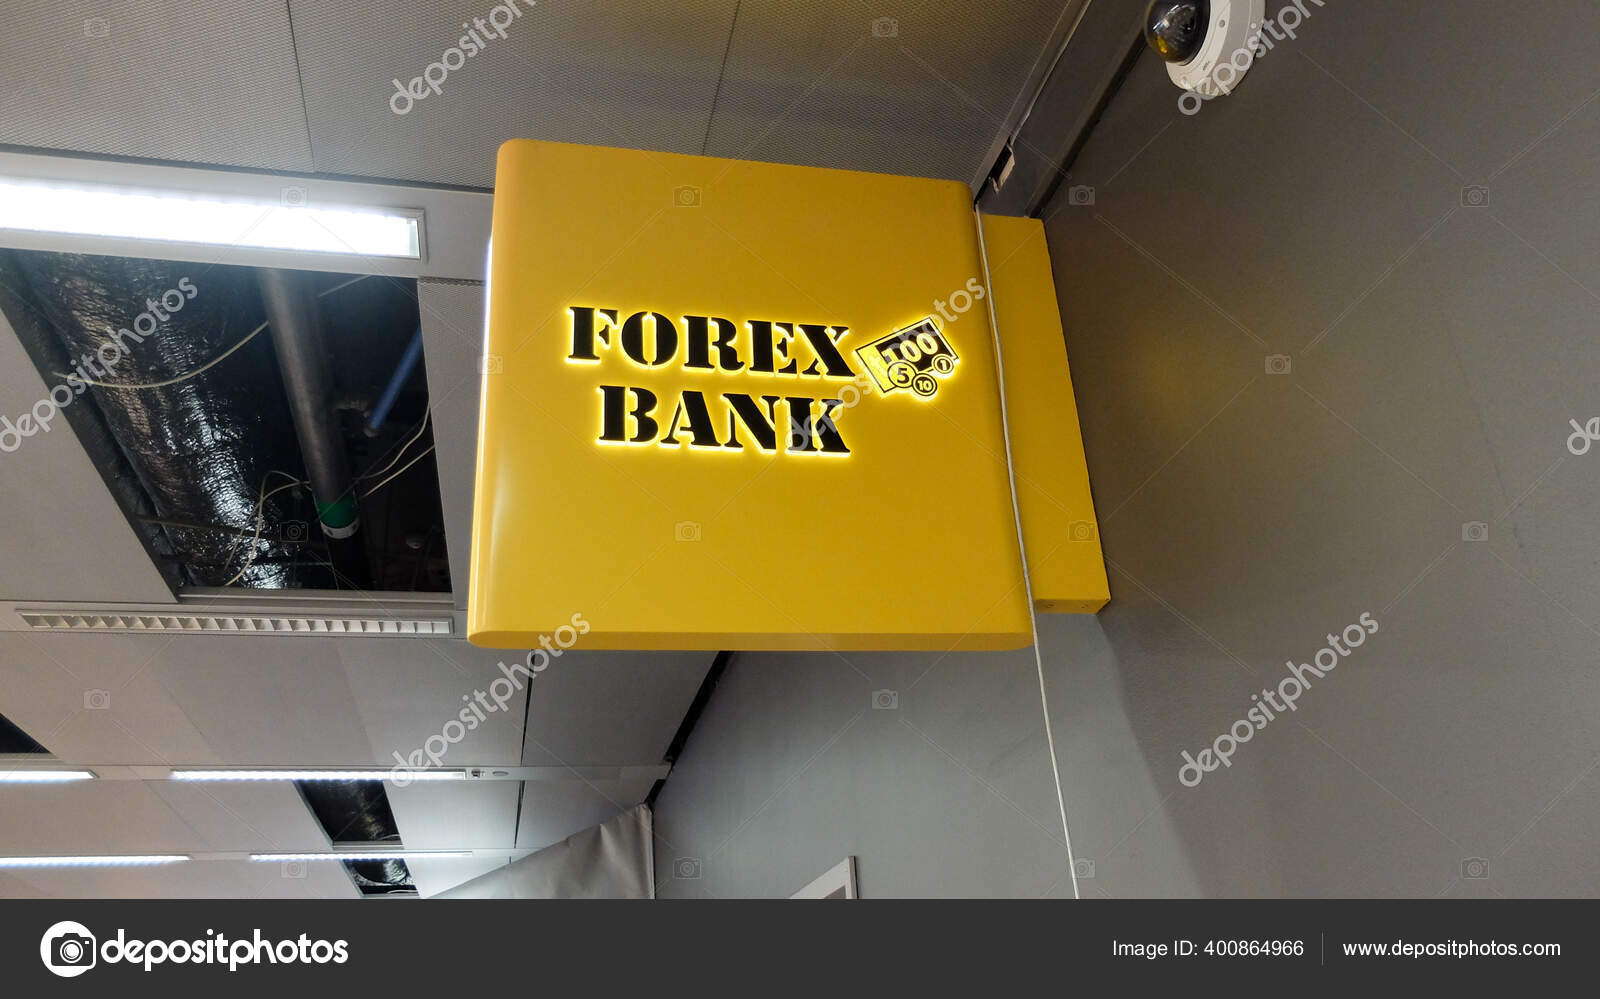 forex bank tampere